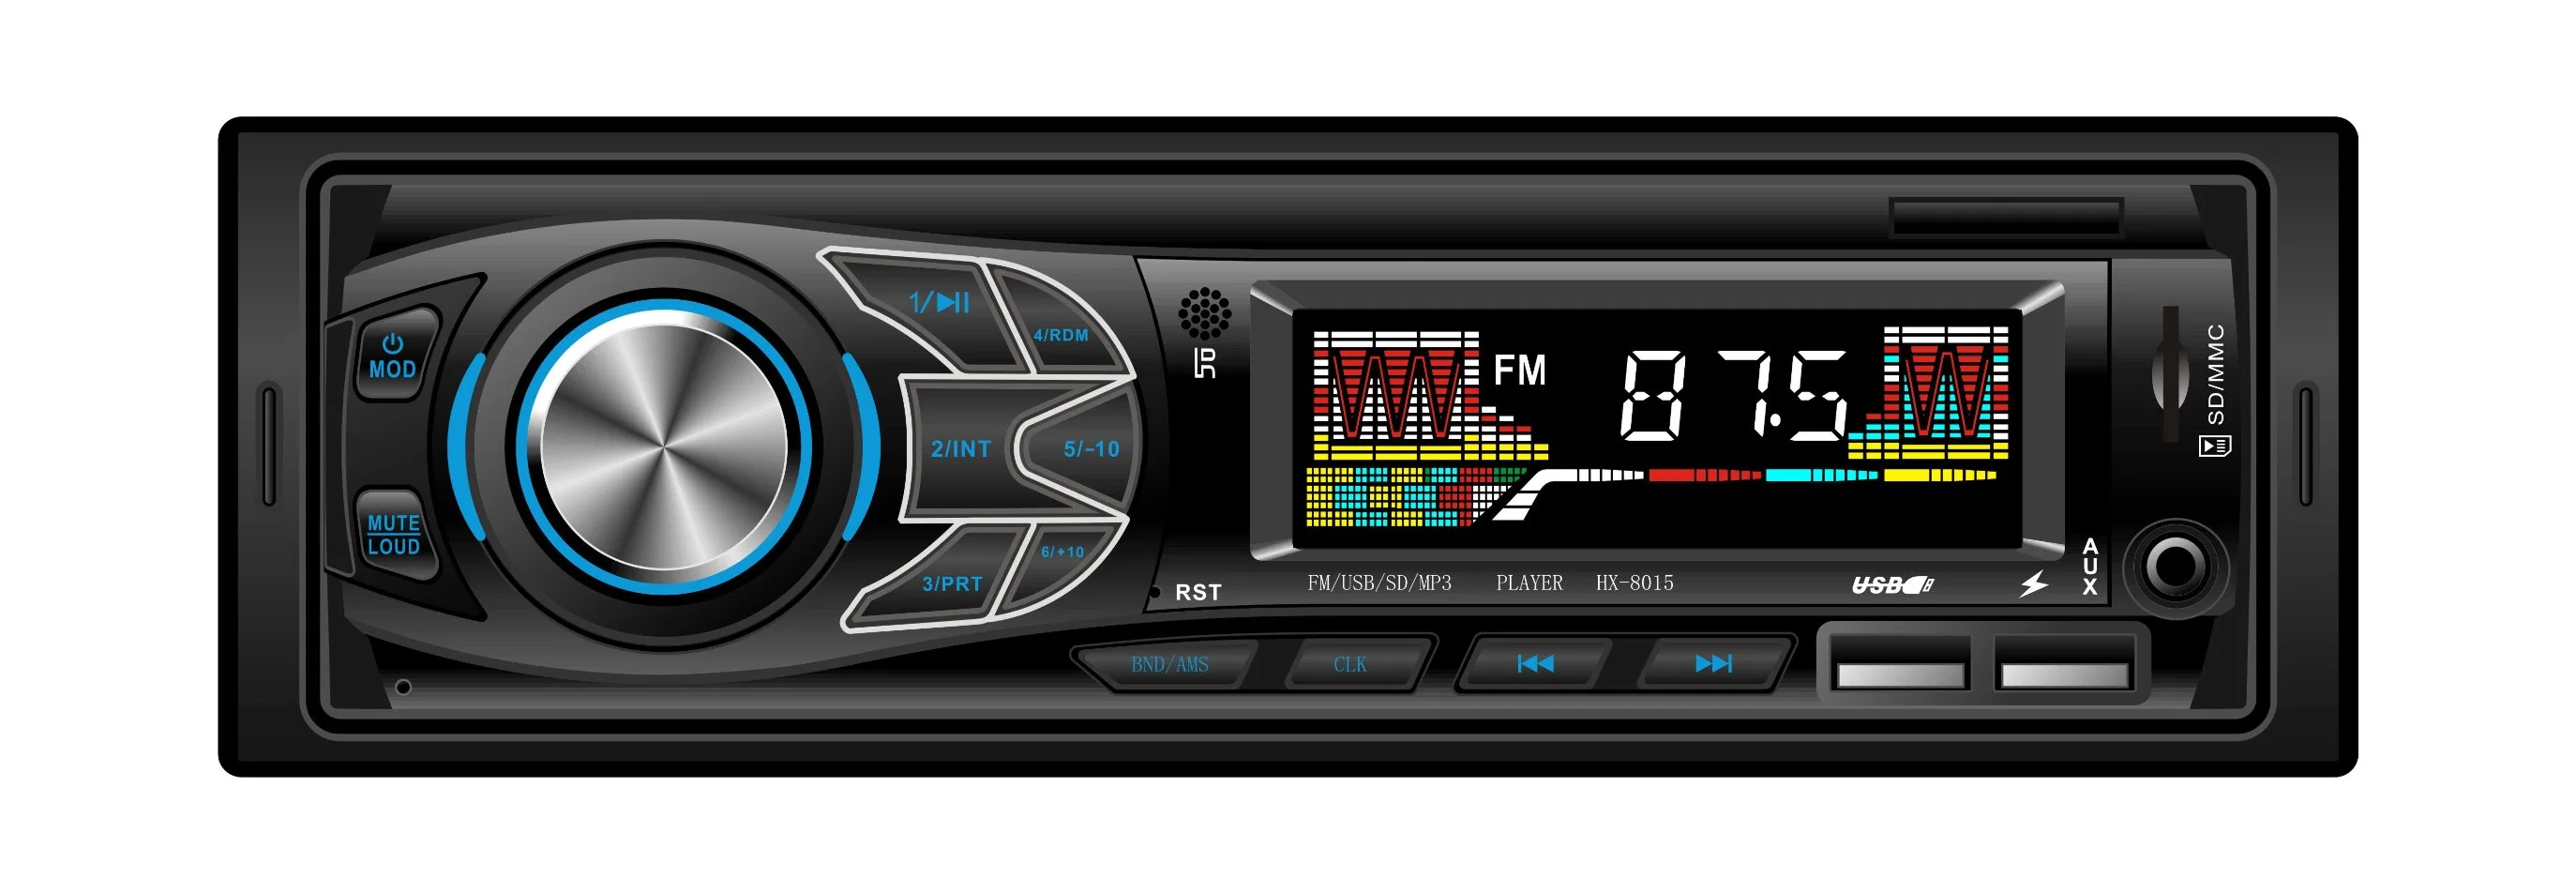 L3015 Car Electrical 1 DIN MP3 Audio Player System Radio